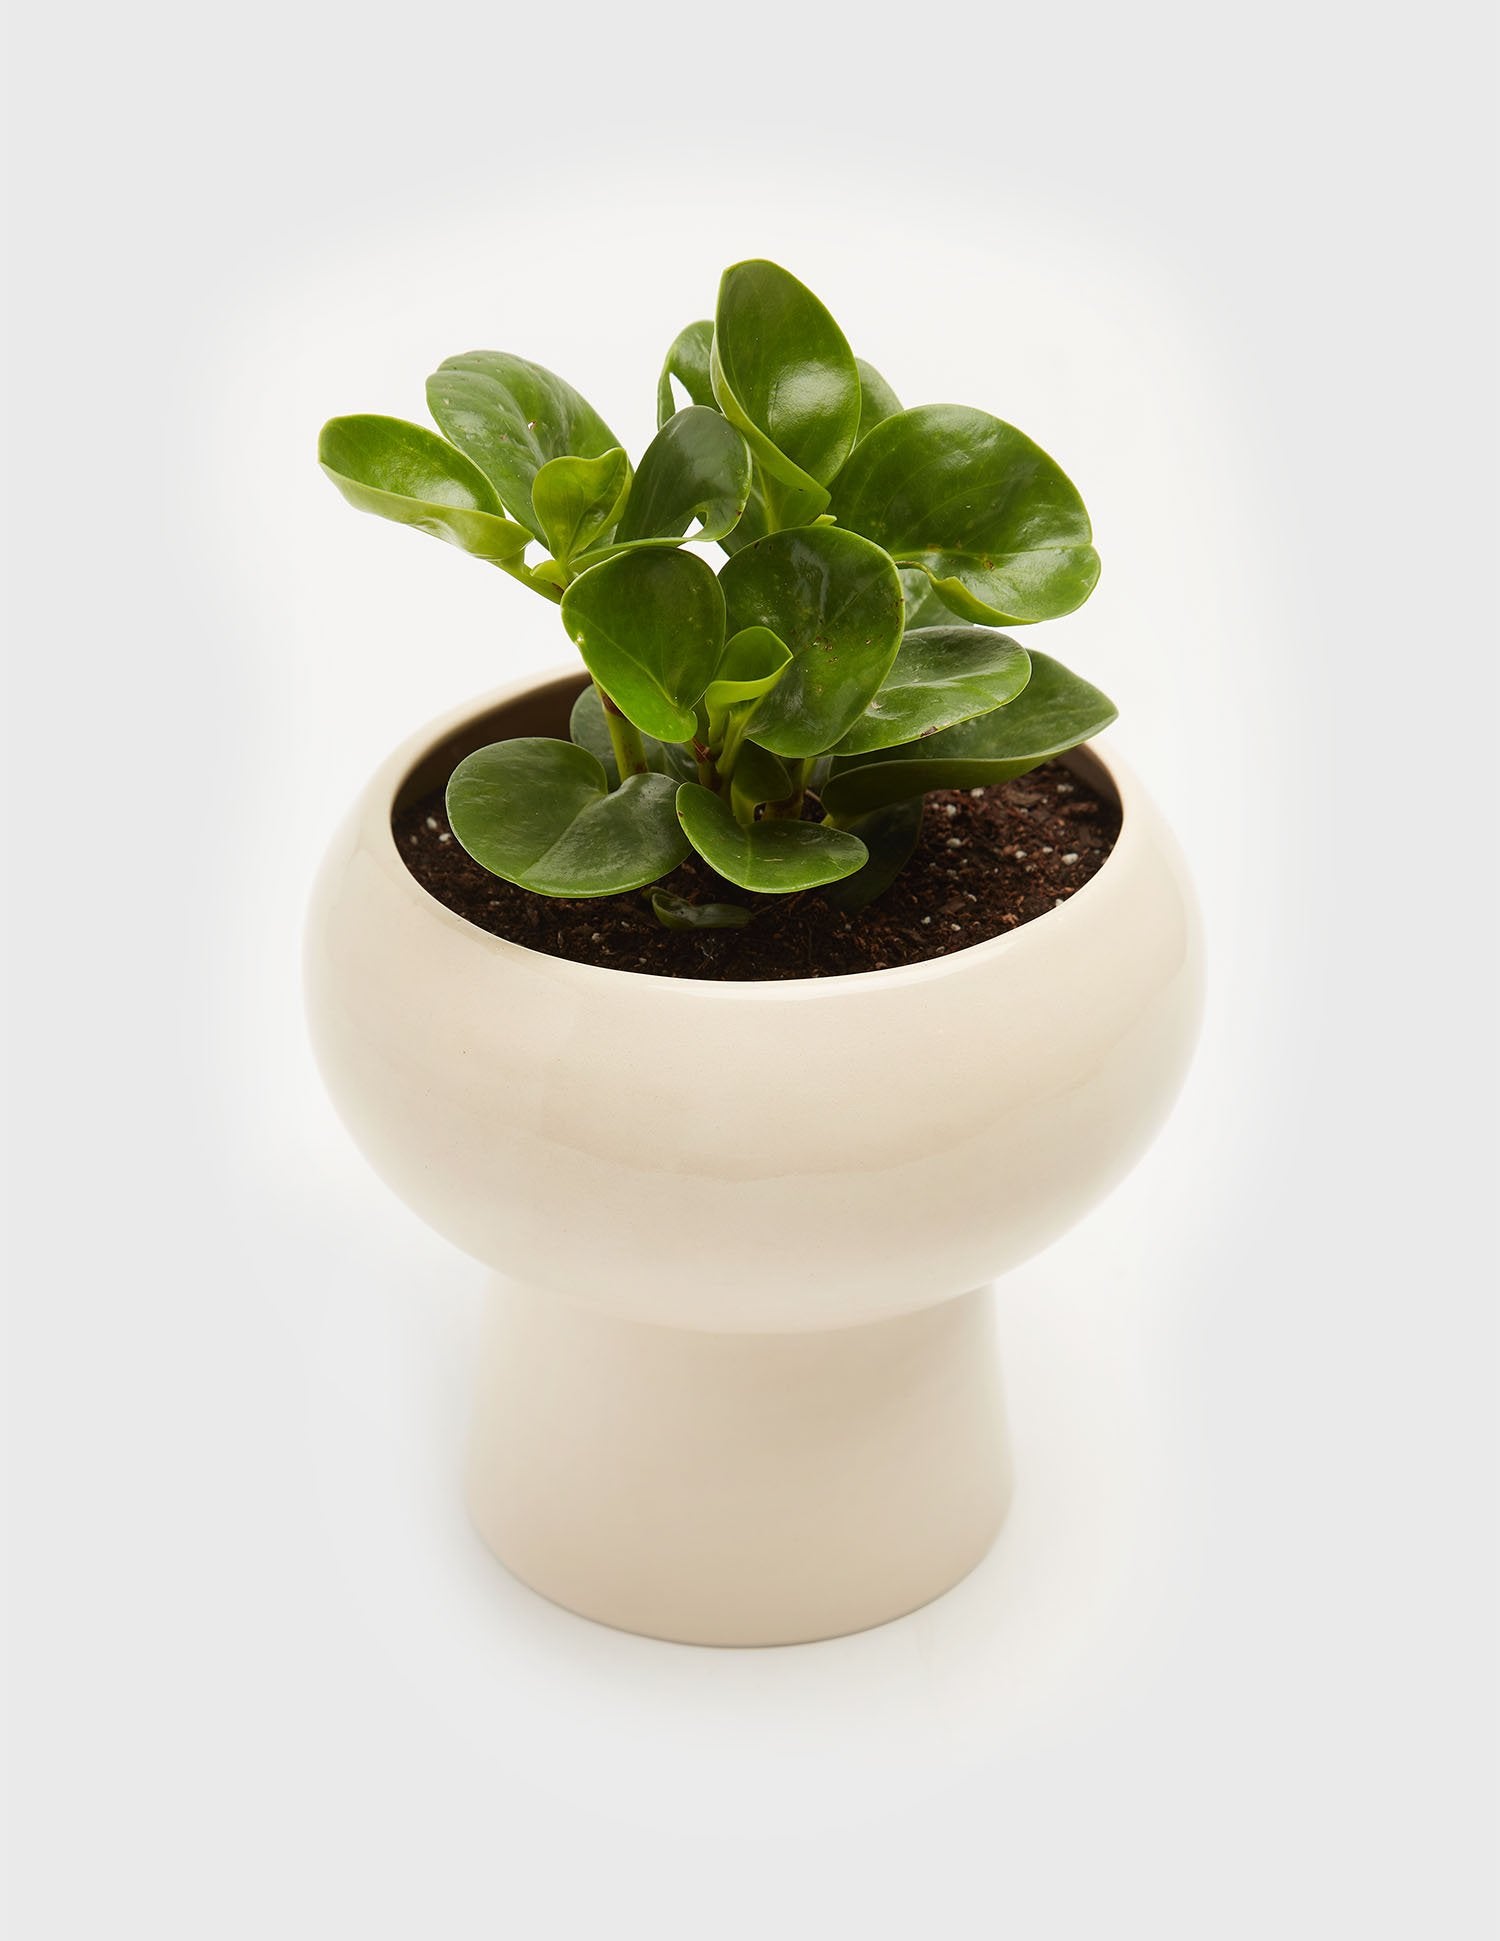 Planta Peperomia en maceta de cerámica | Compra plantas online | Balcón